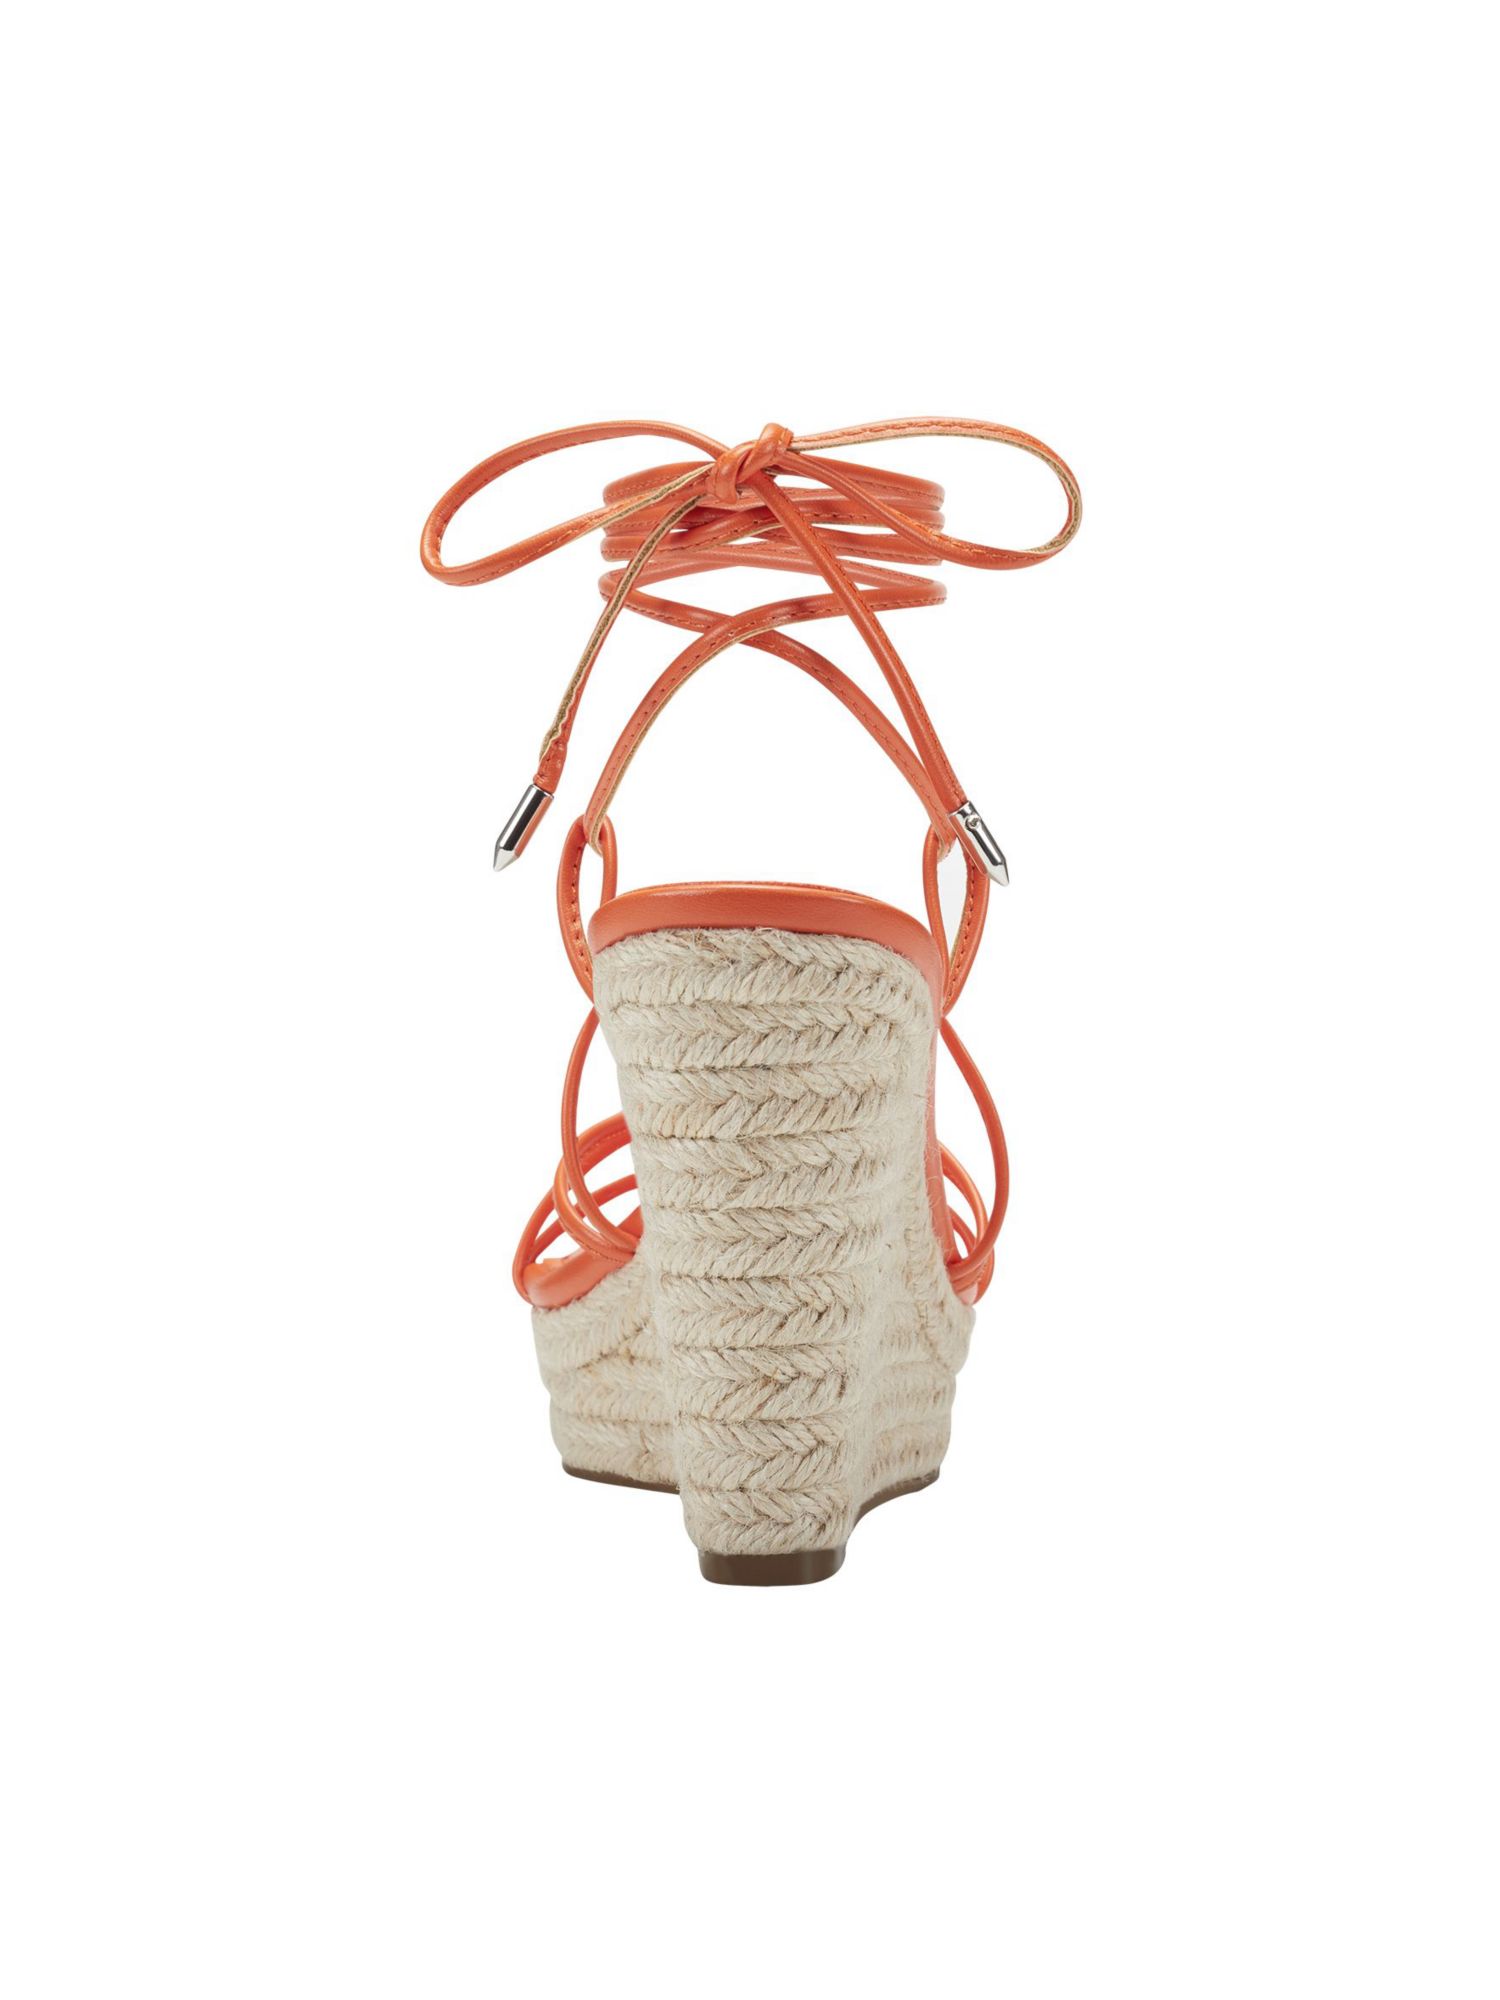 MARC FISHER Womens Orange 1" Platform Lace Strappy Kyle Almond Toe Wedge Buckle Dress Espadrille Shoes 7.5 M